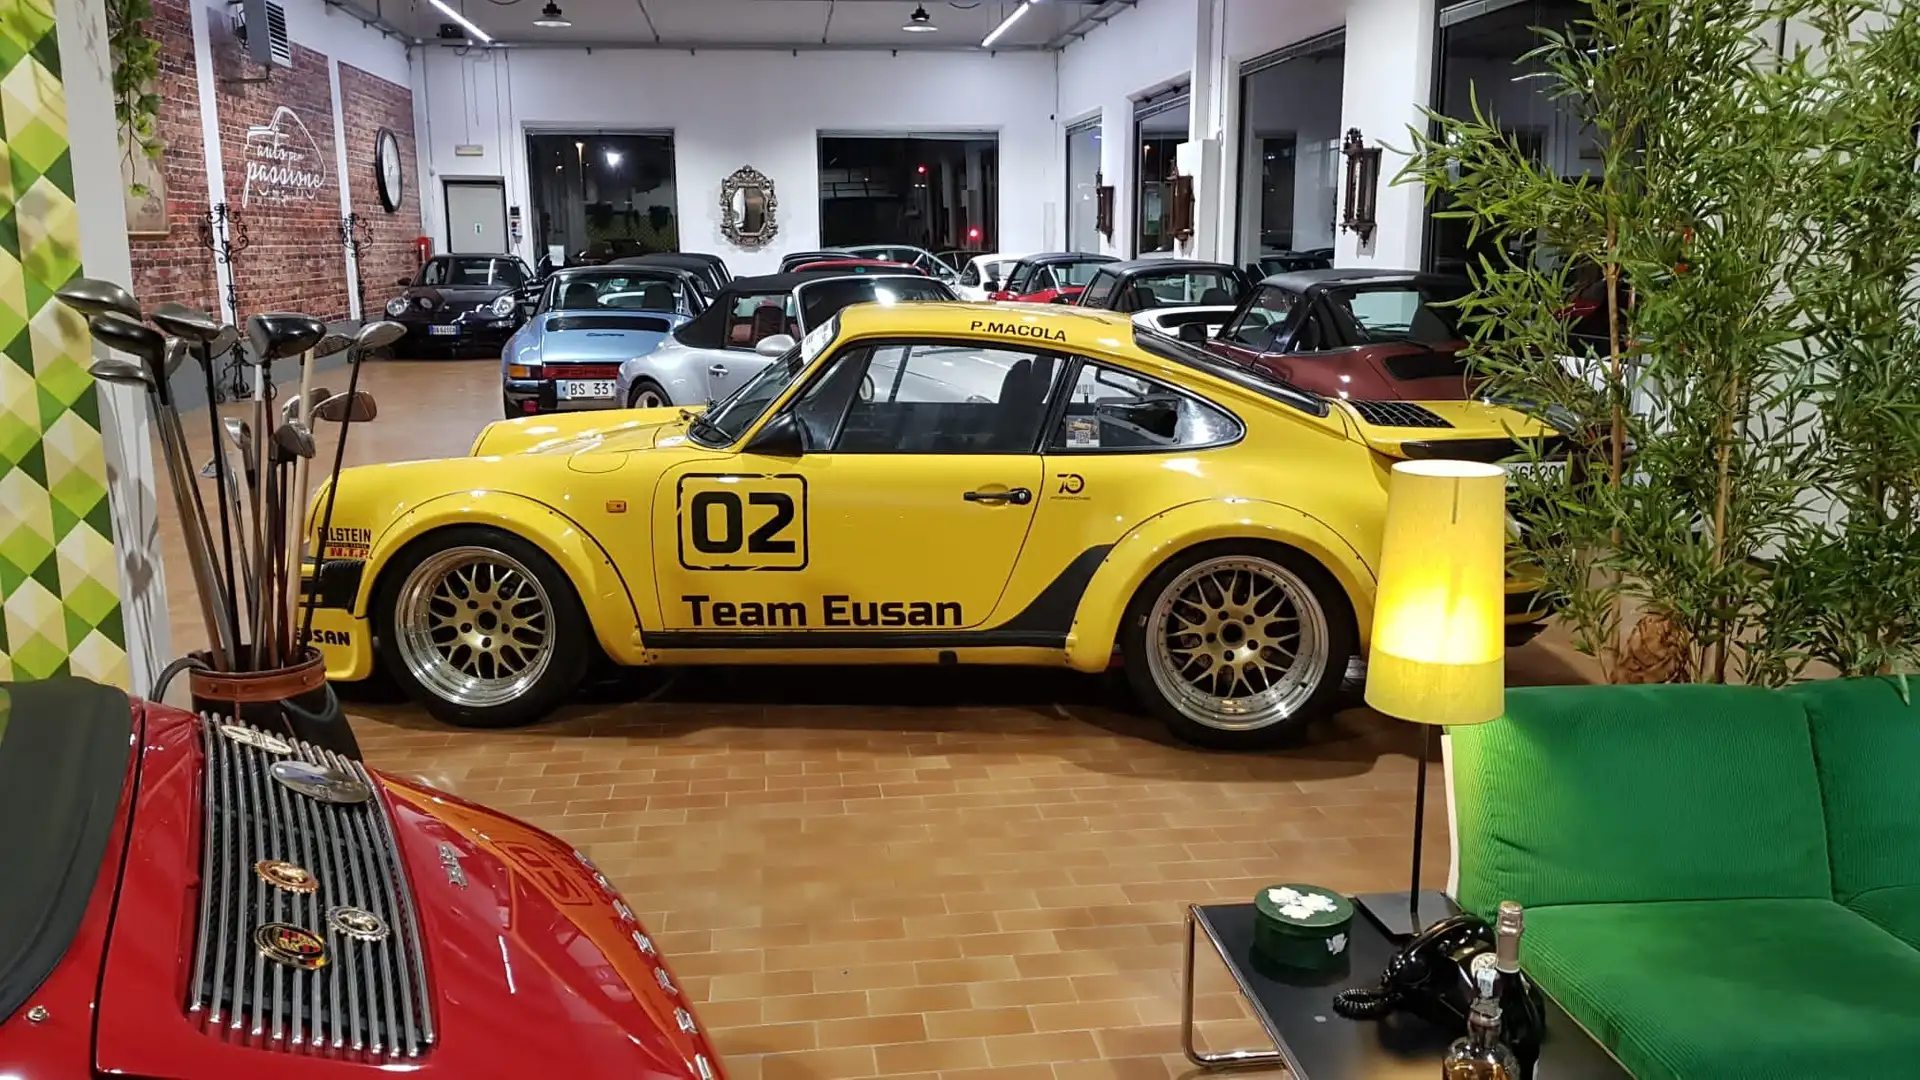 Porsche 911 911 930 Porsche Turbo Super Sport Racing GT Cup Yellow - 2